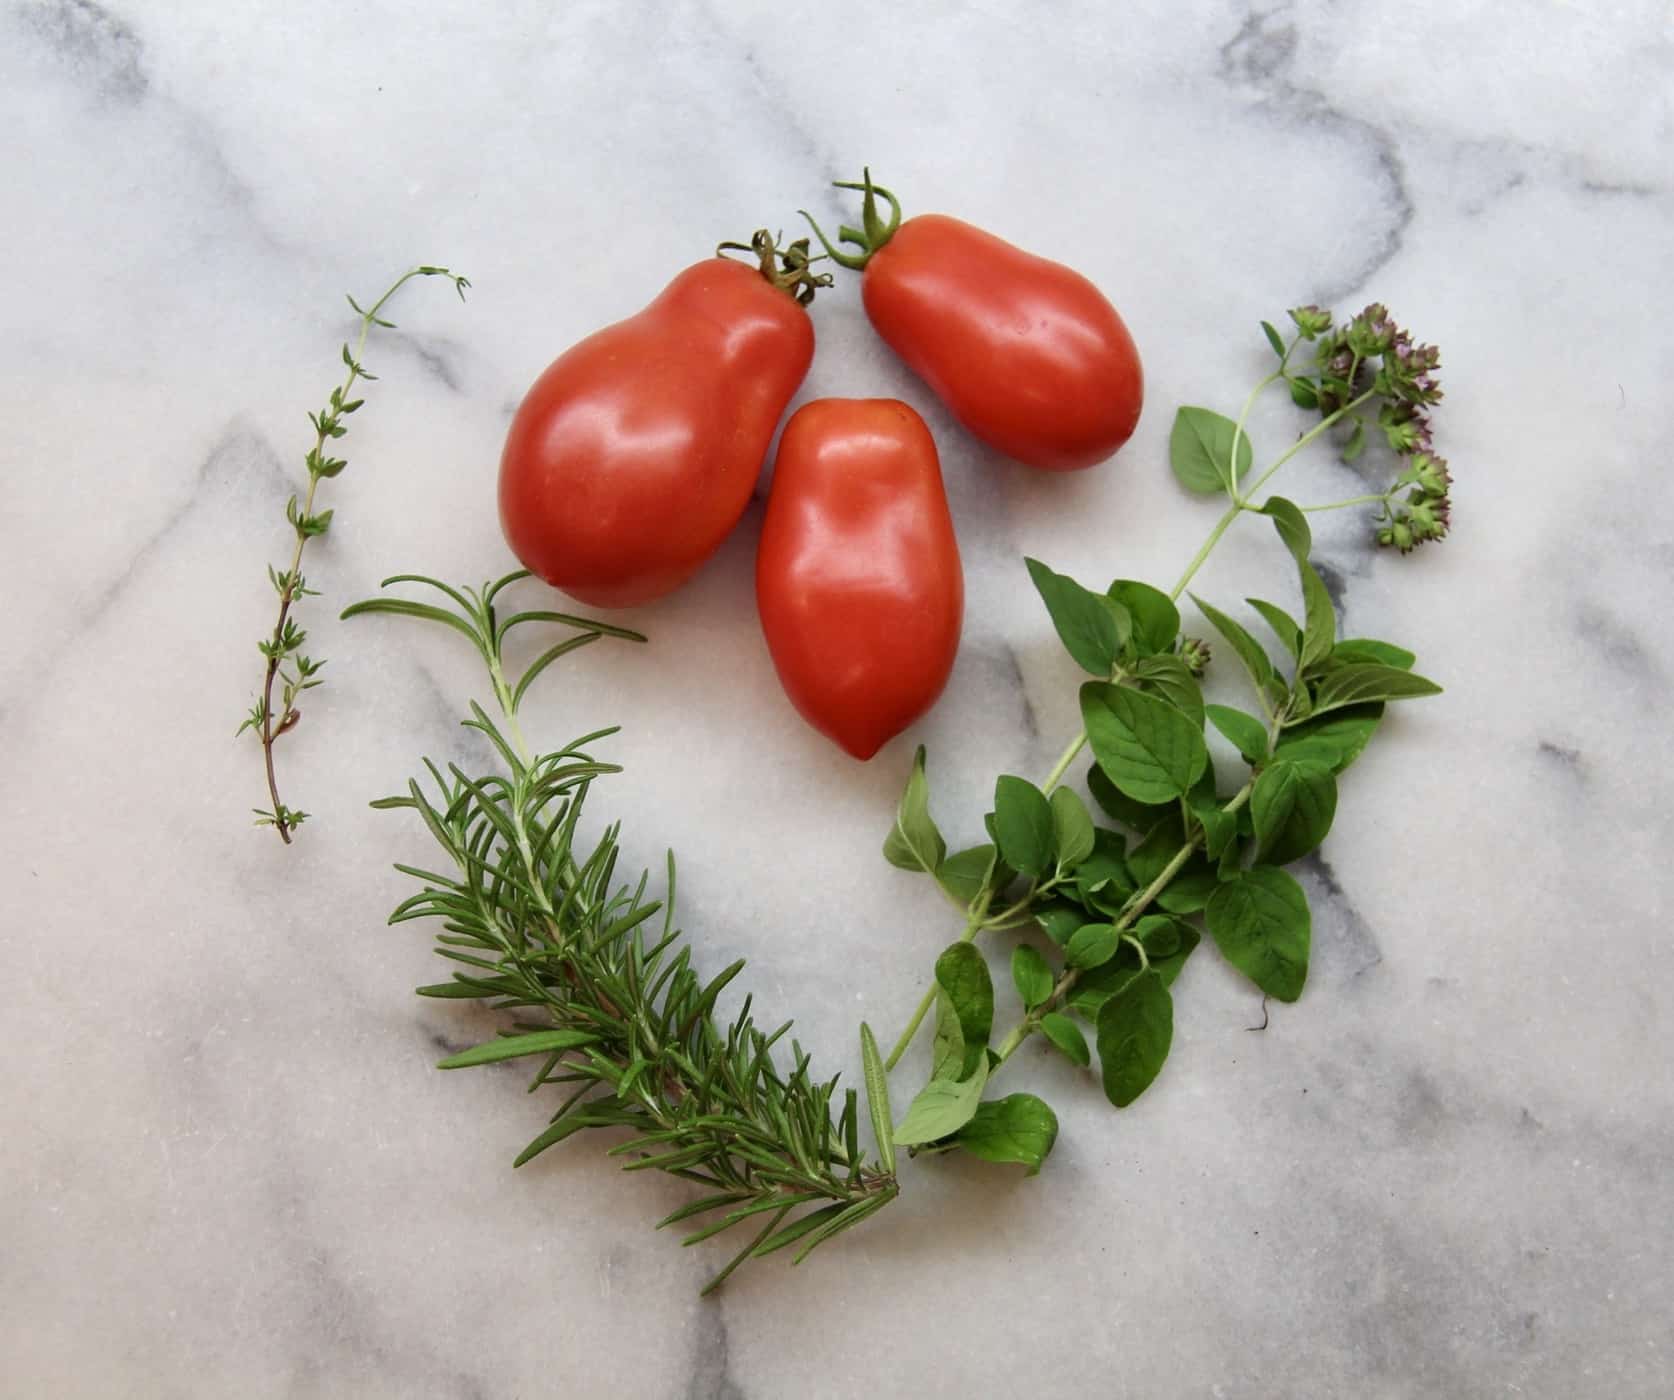 Italian san marzano tomatoes with herbs on marble countertop